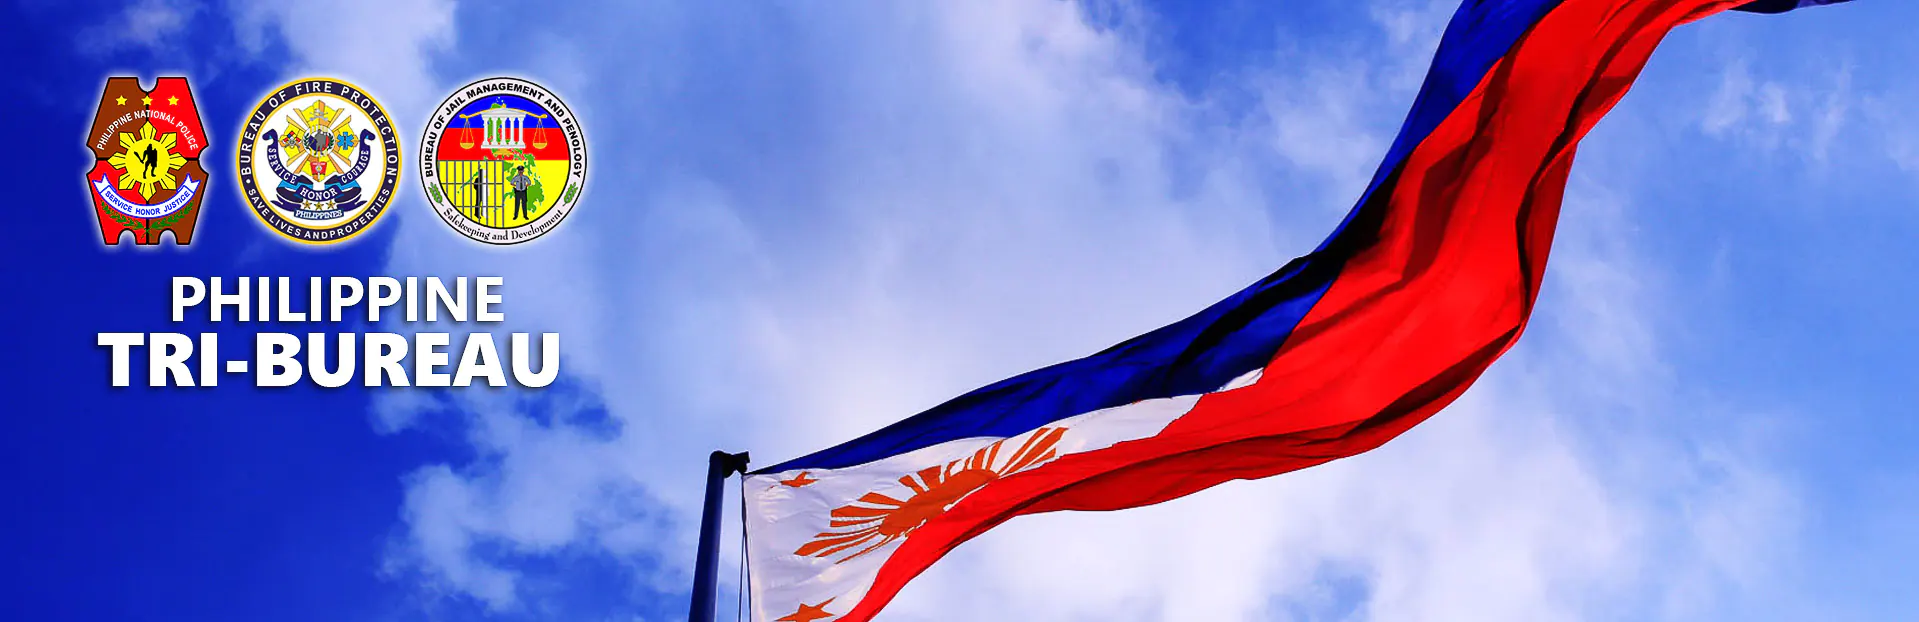 Philippines Tri Bureau Banner